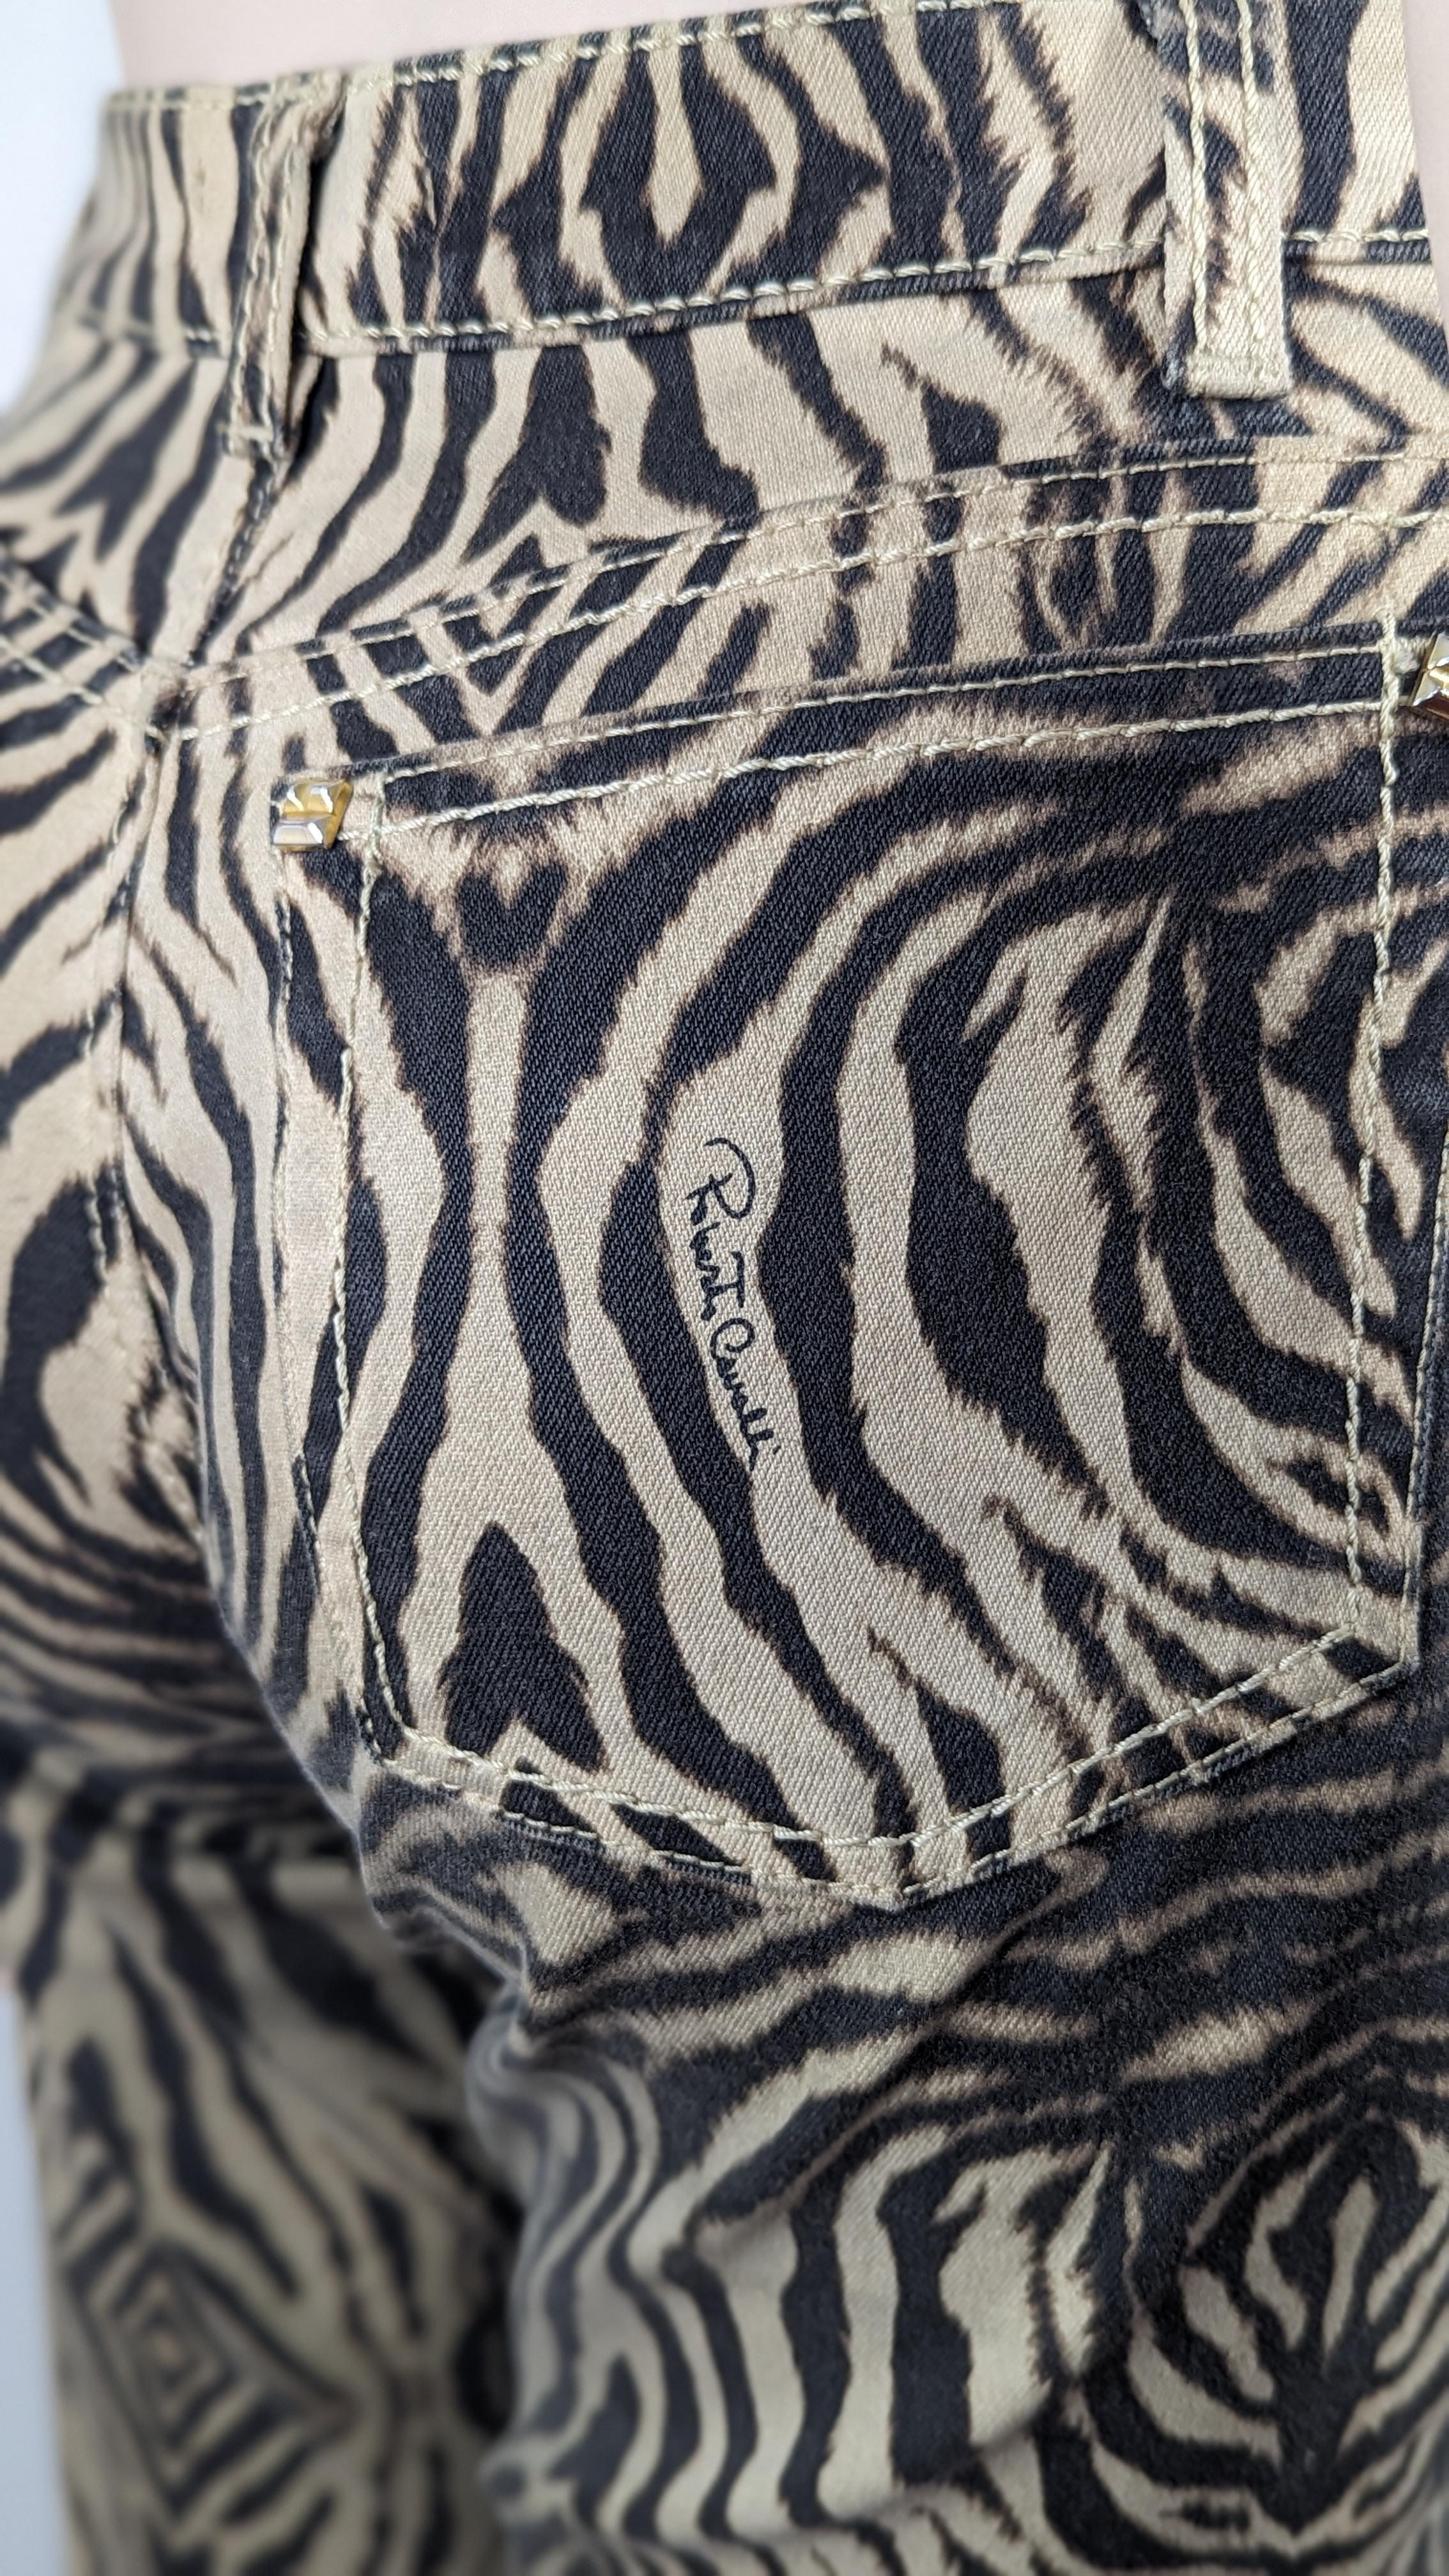 Roberto Cavalli animal print jeans For Sale 4